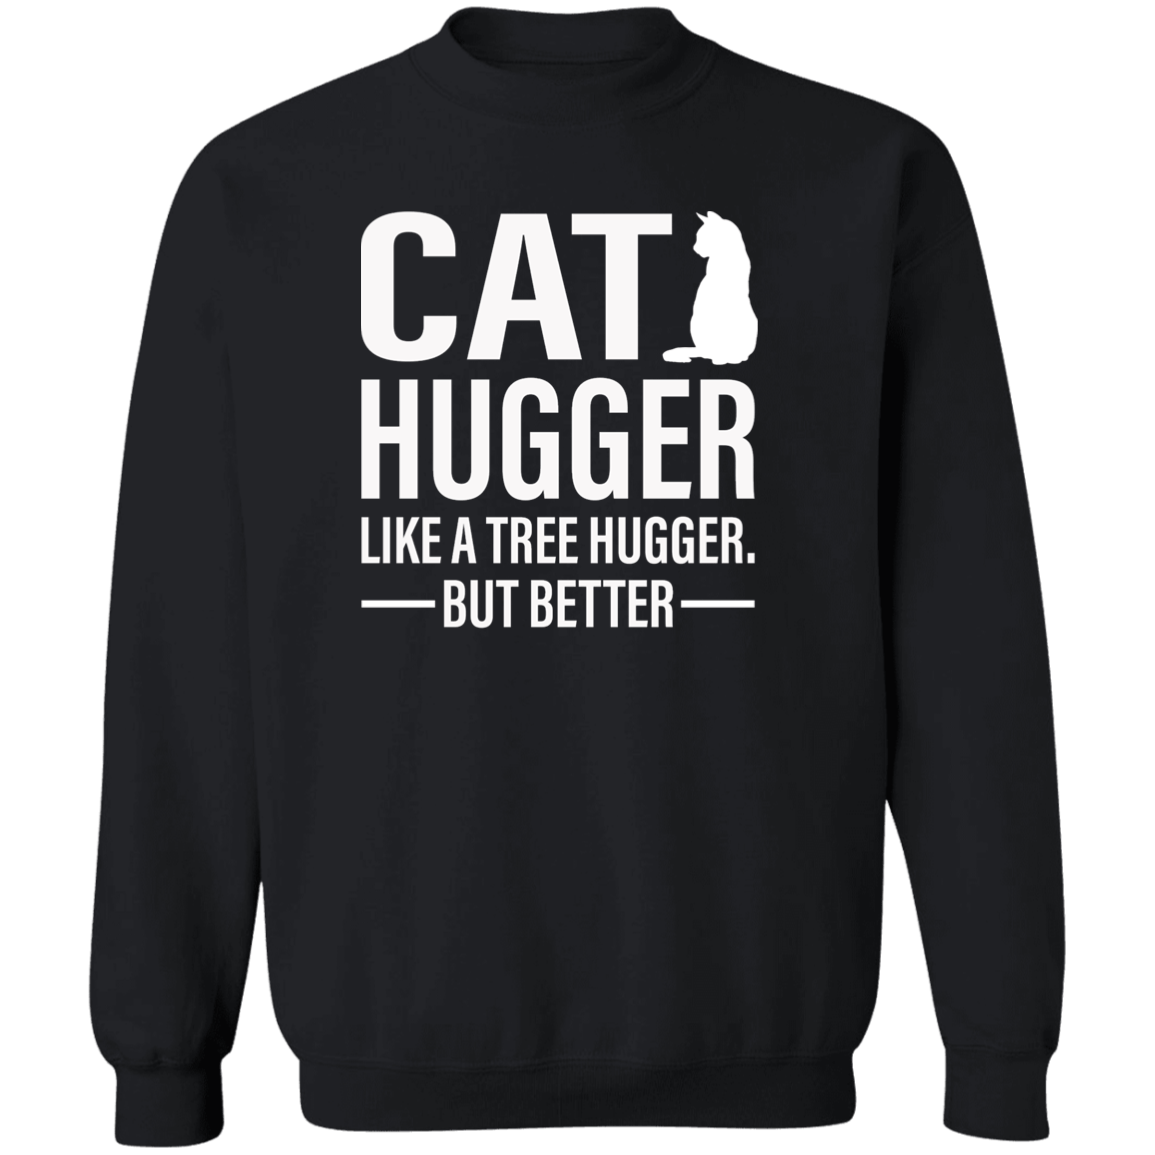 Cat Hugger - Sweatshirt.